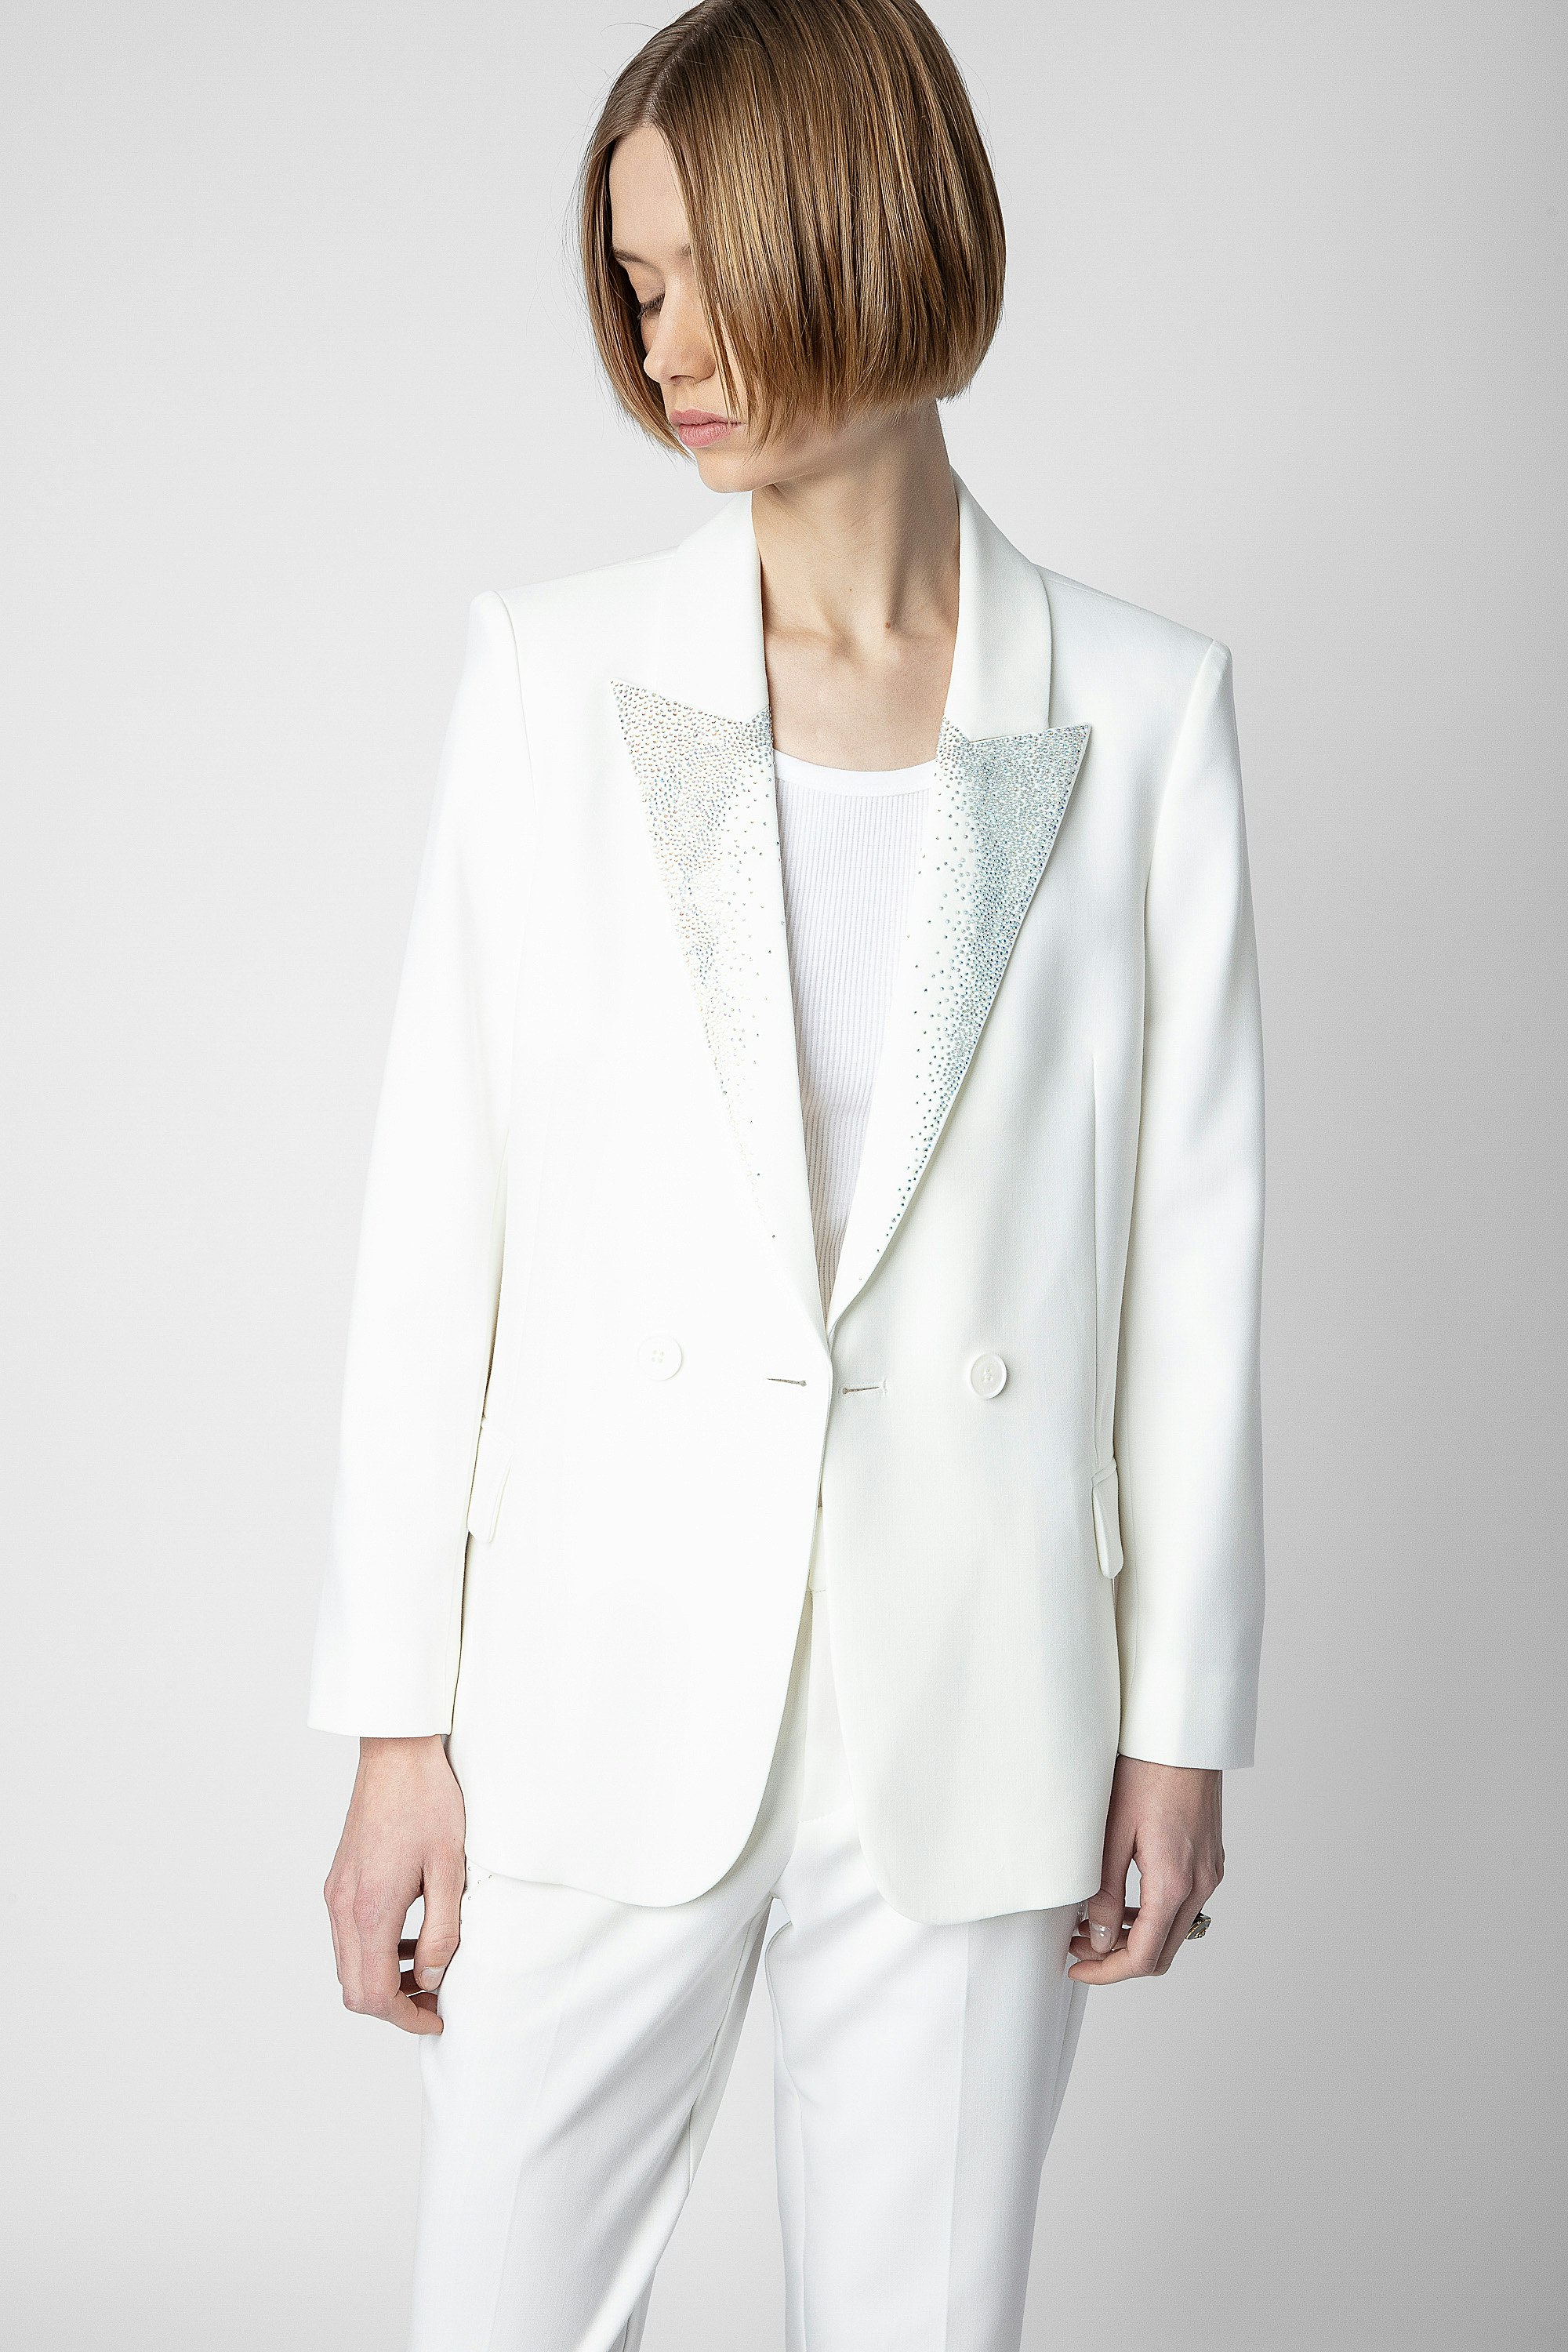 Visit Blazer - Women's off-white tailored jacket with rhinestone-studded collar